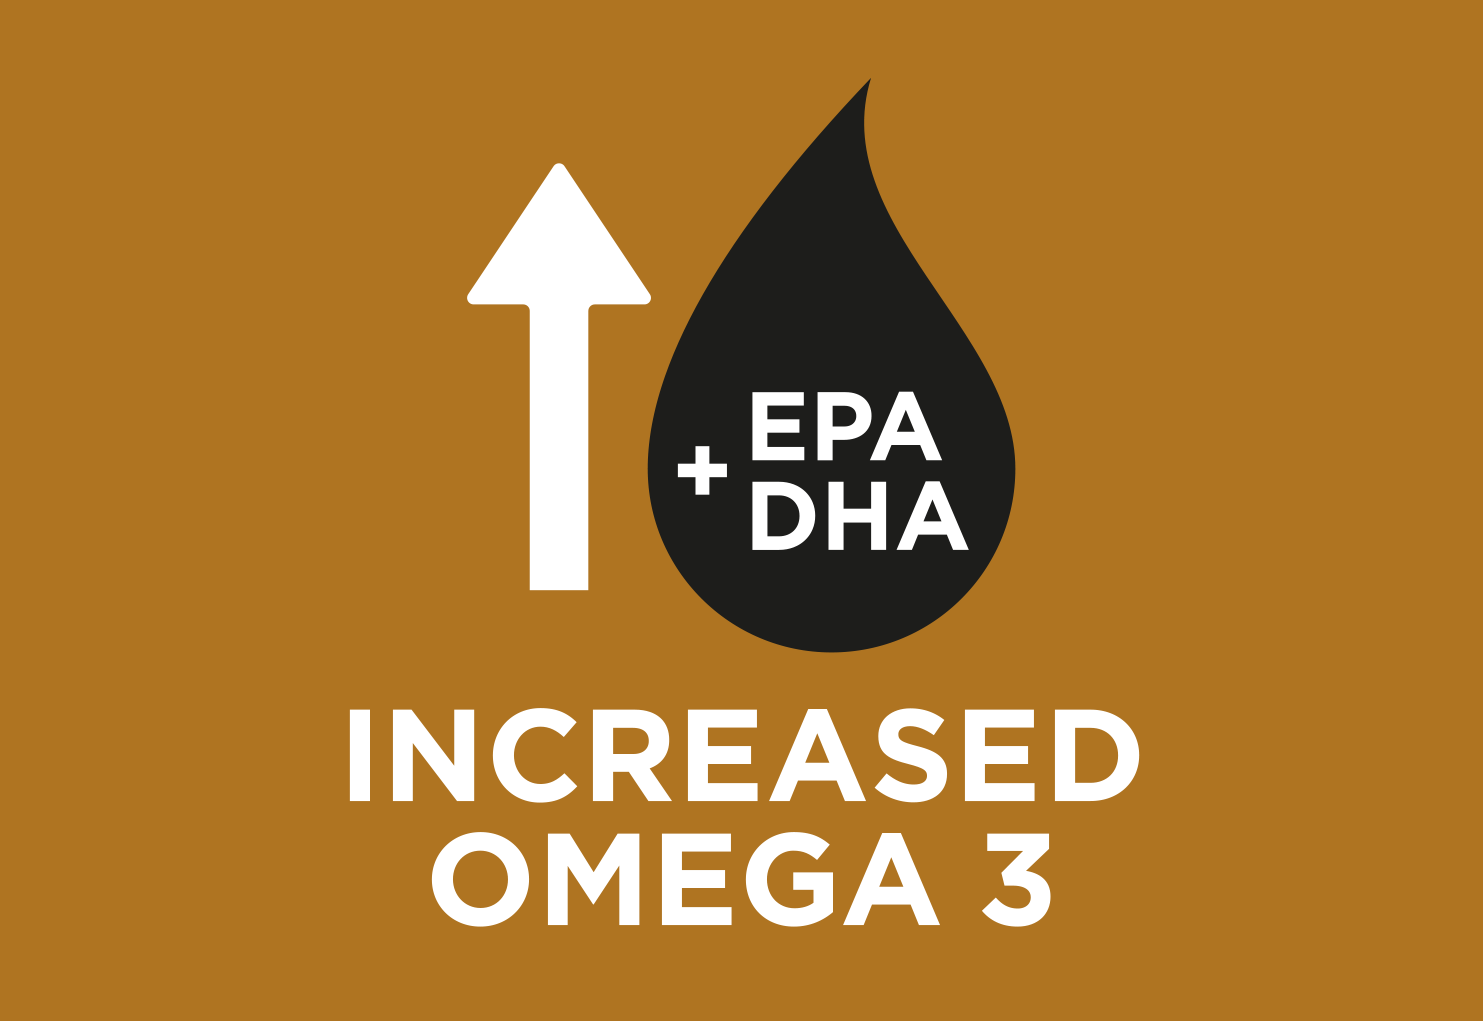 Increased levels of omega 3 fatty acids